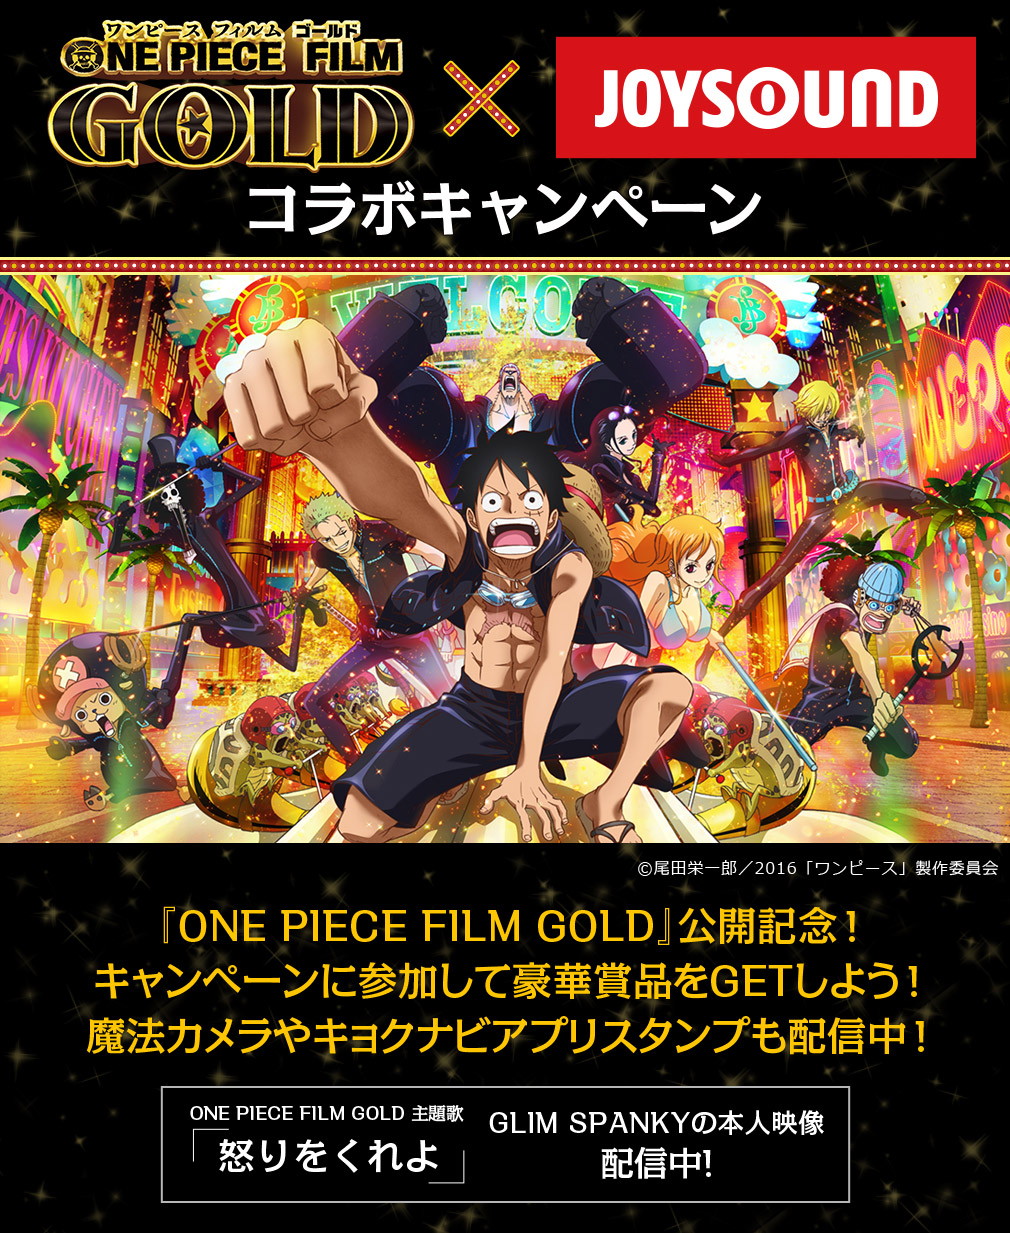 『ONE PIECE FILM GOLD』× JOYSOUND コラボキャンペーン